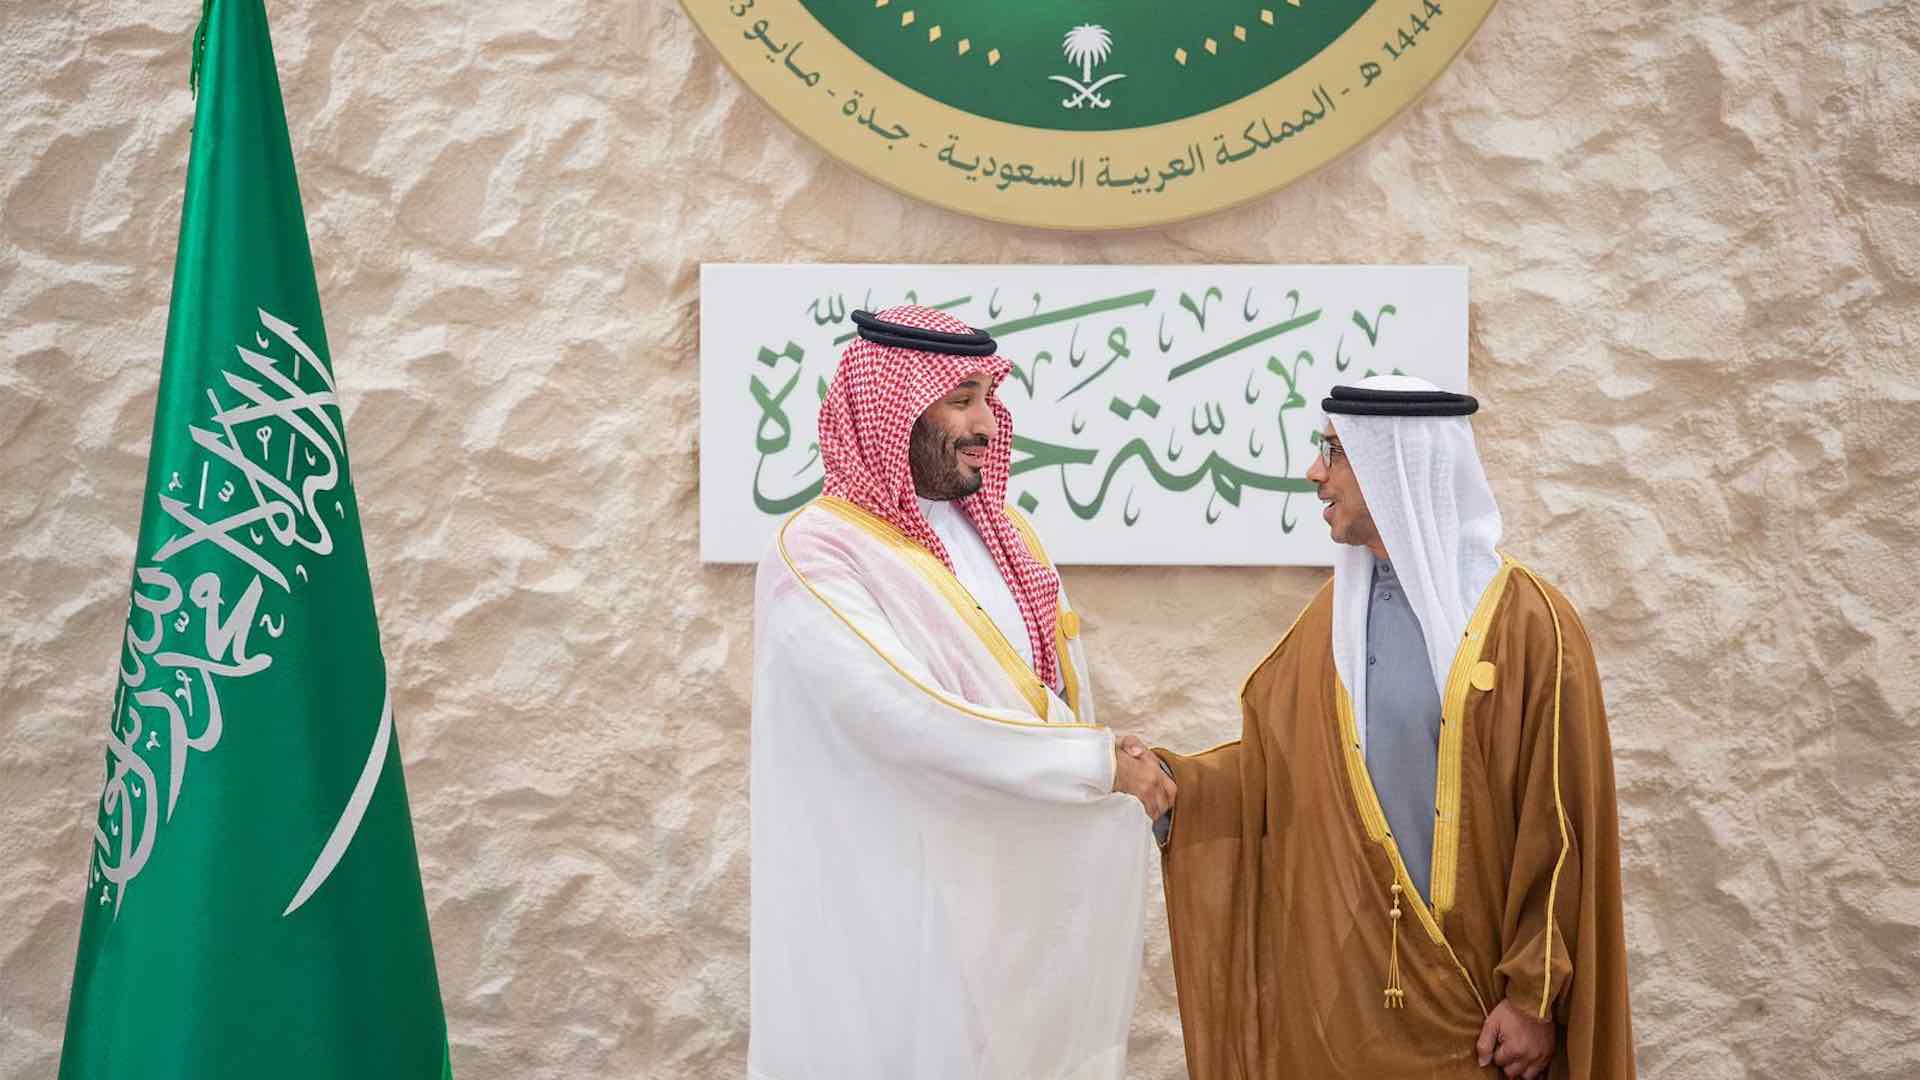 UAE commits to regional stability: Sheikh Mansour bin Zayed’s key message at Arab summit